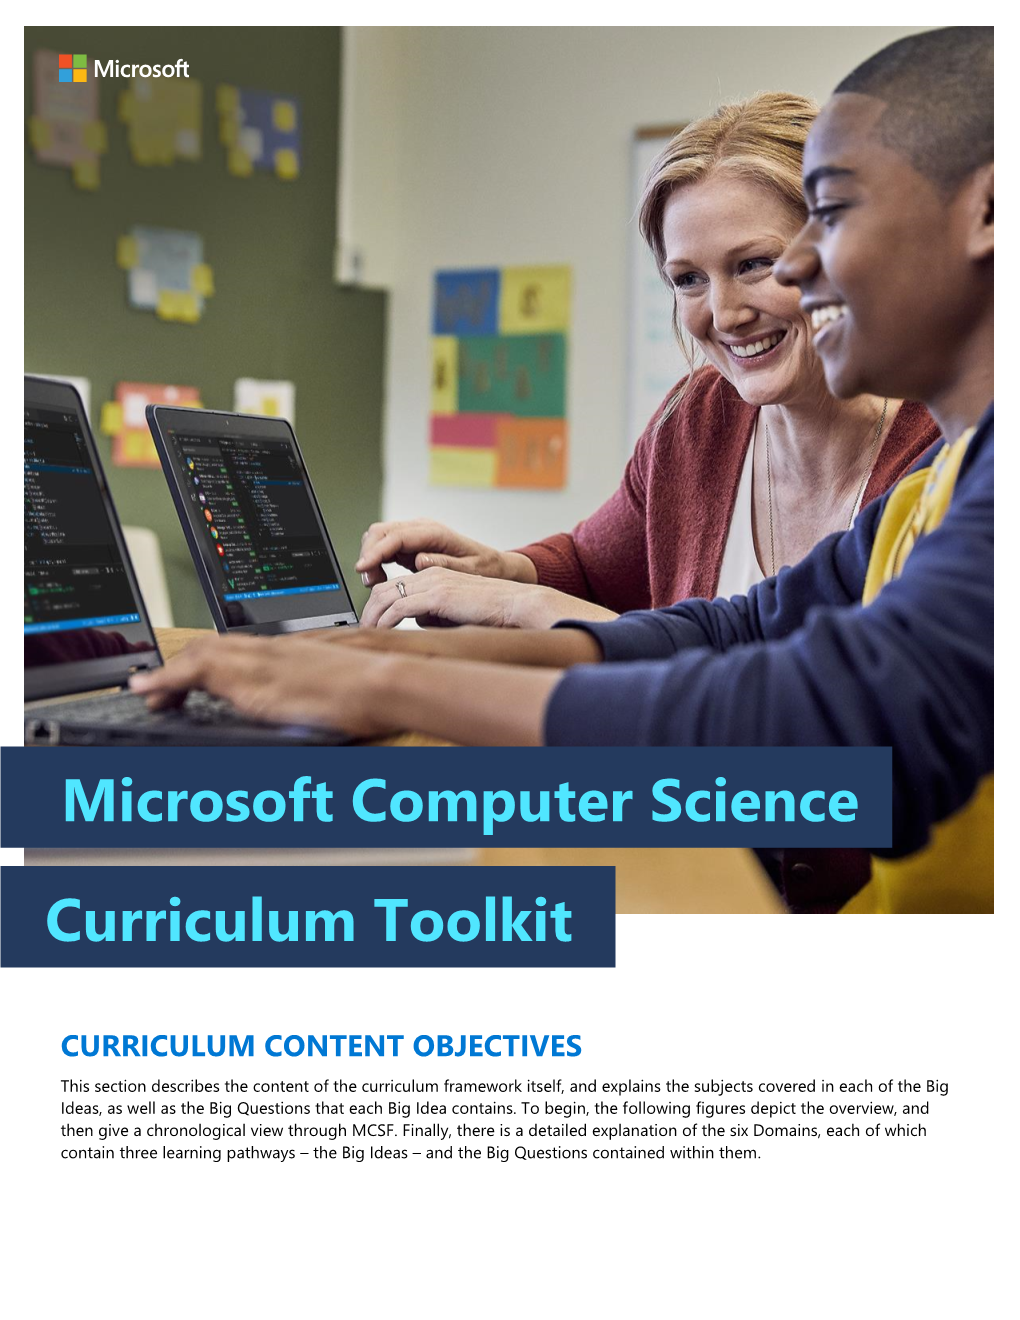 Microsoft Computer Science Curriculum Toolkit // Curriculum Framework Objectives